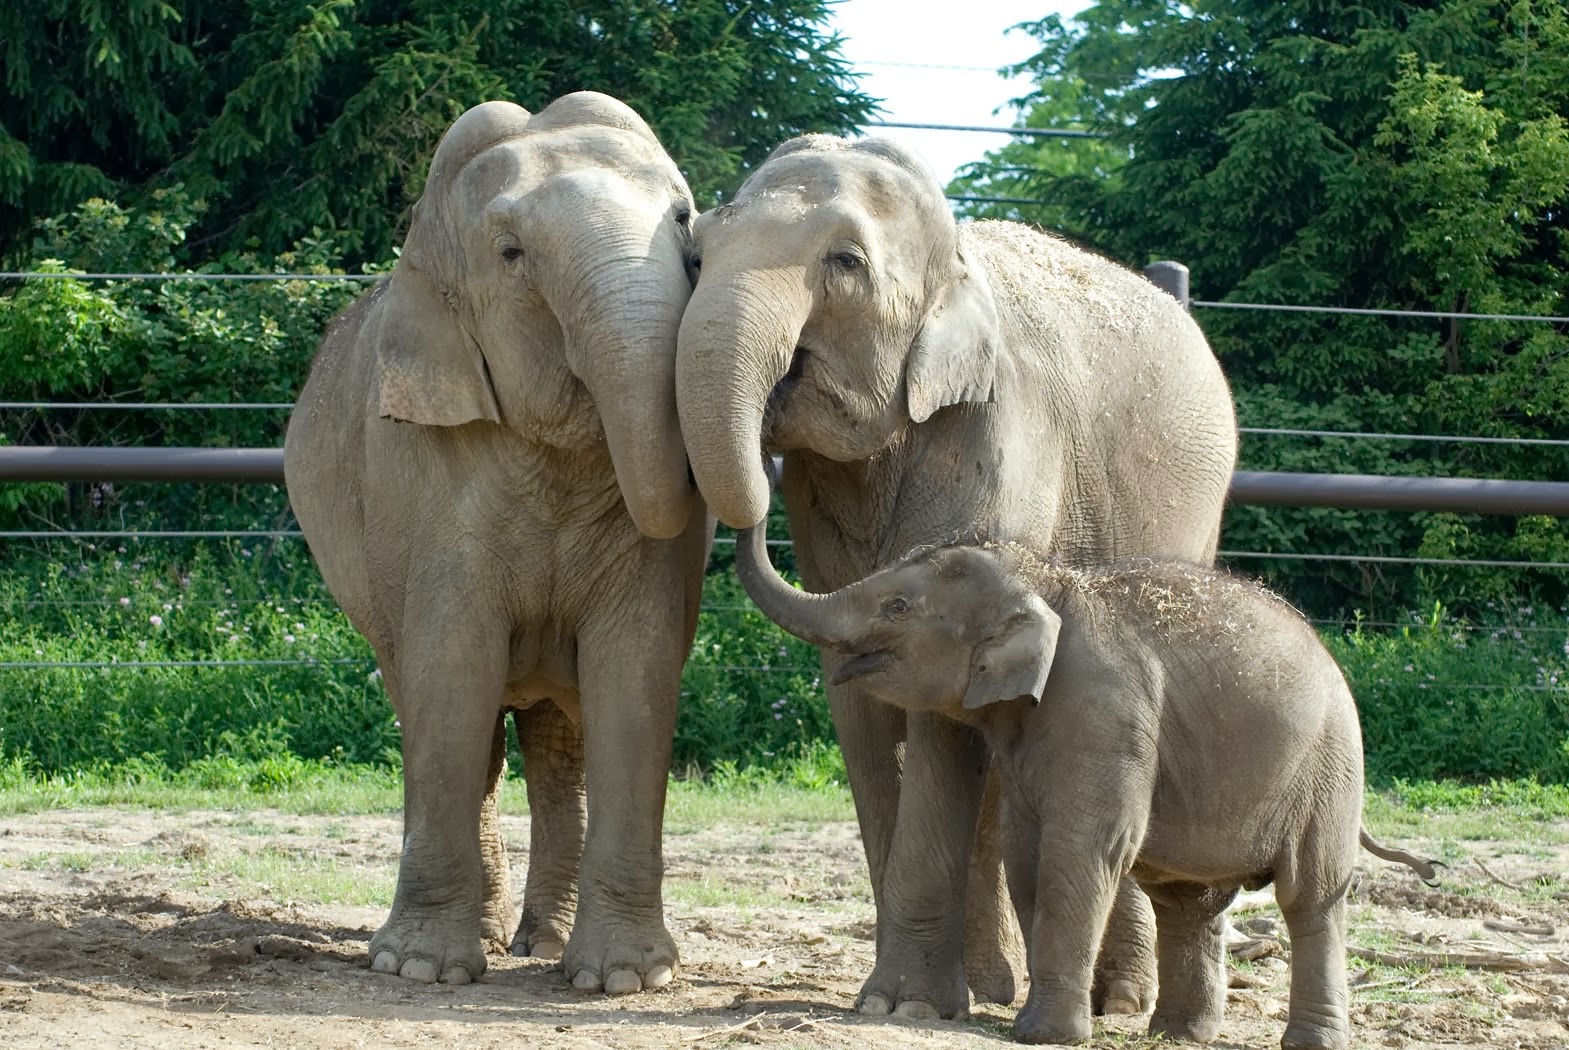 Elephants at the Columbus Zoo